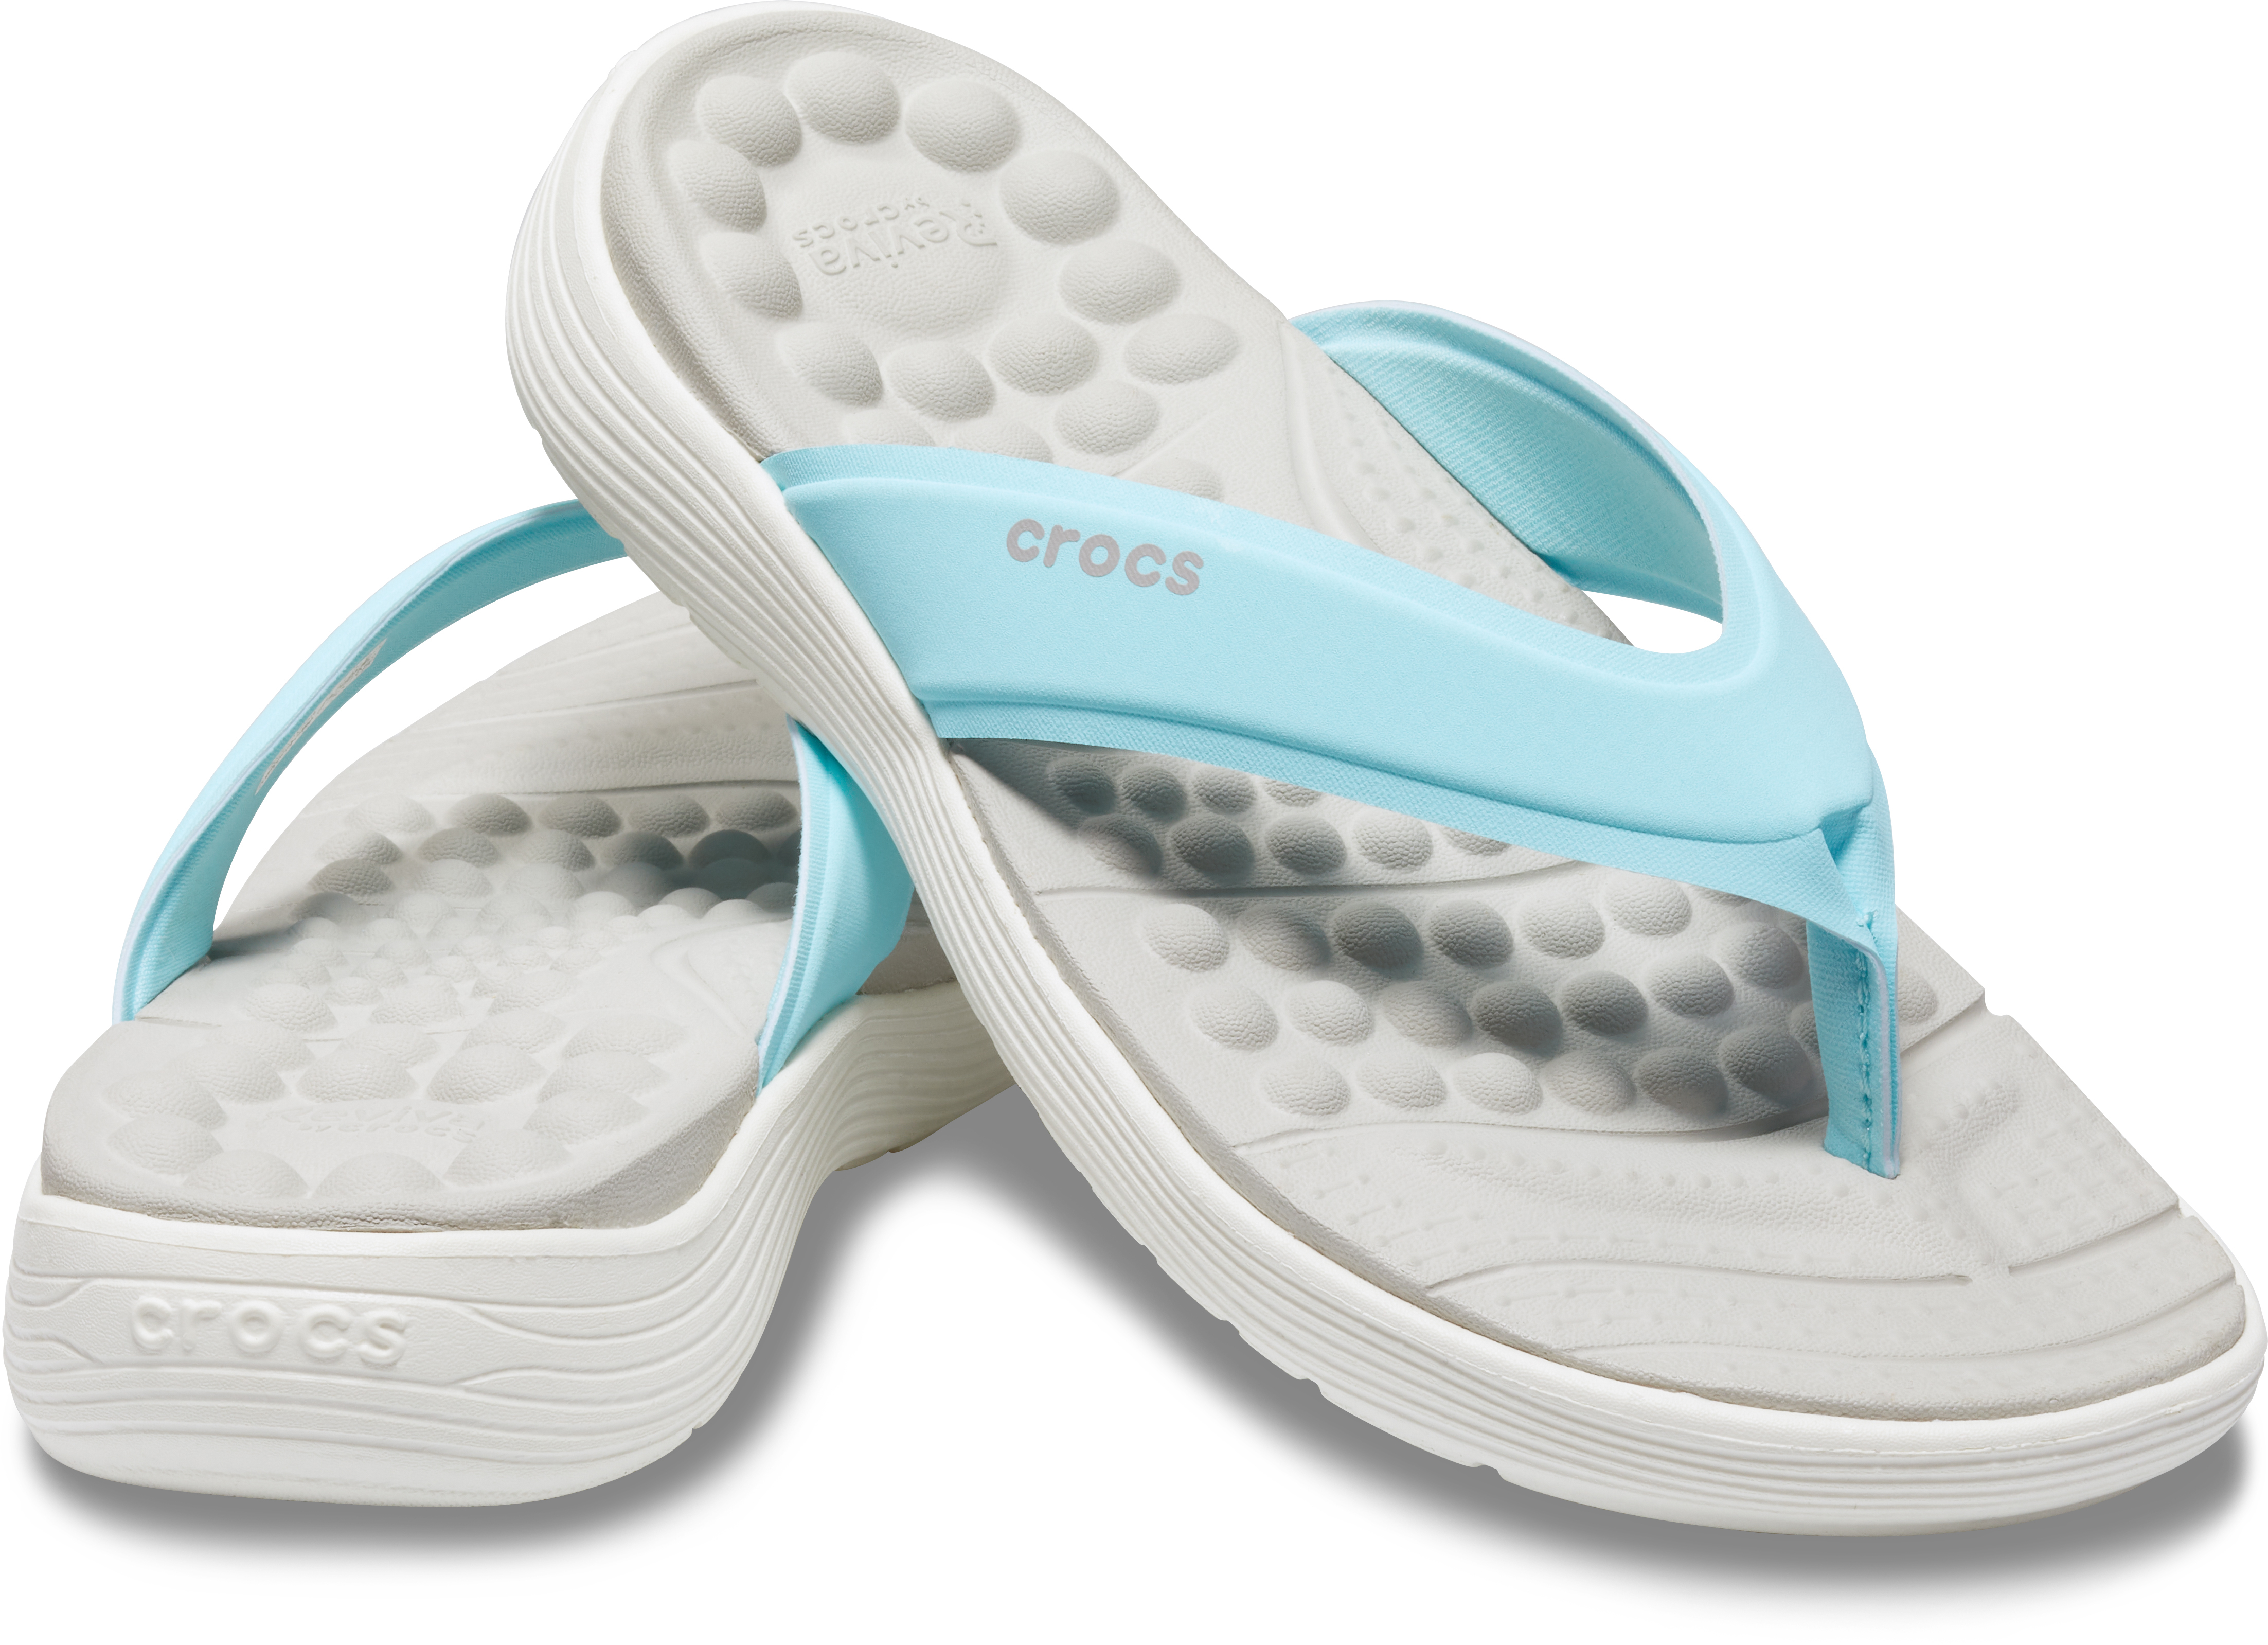 crocs reviva slippers